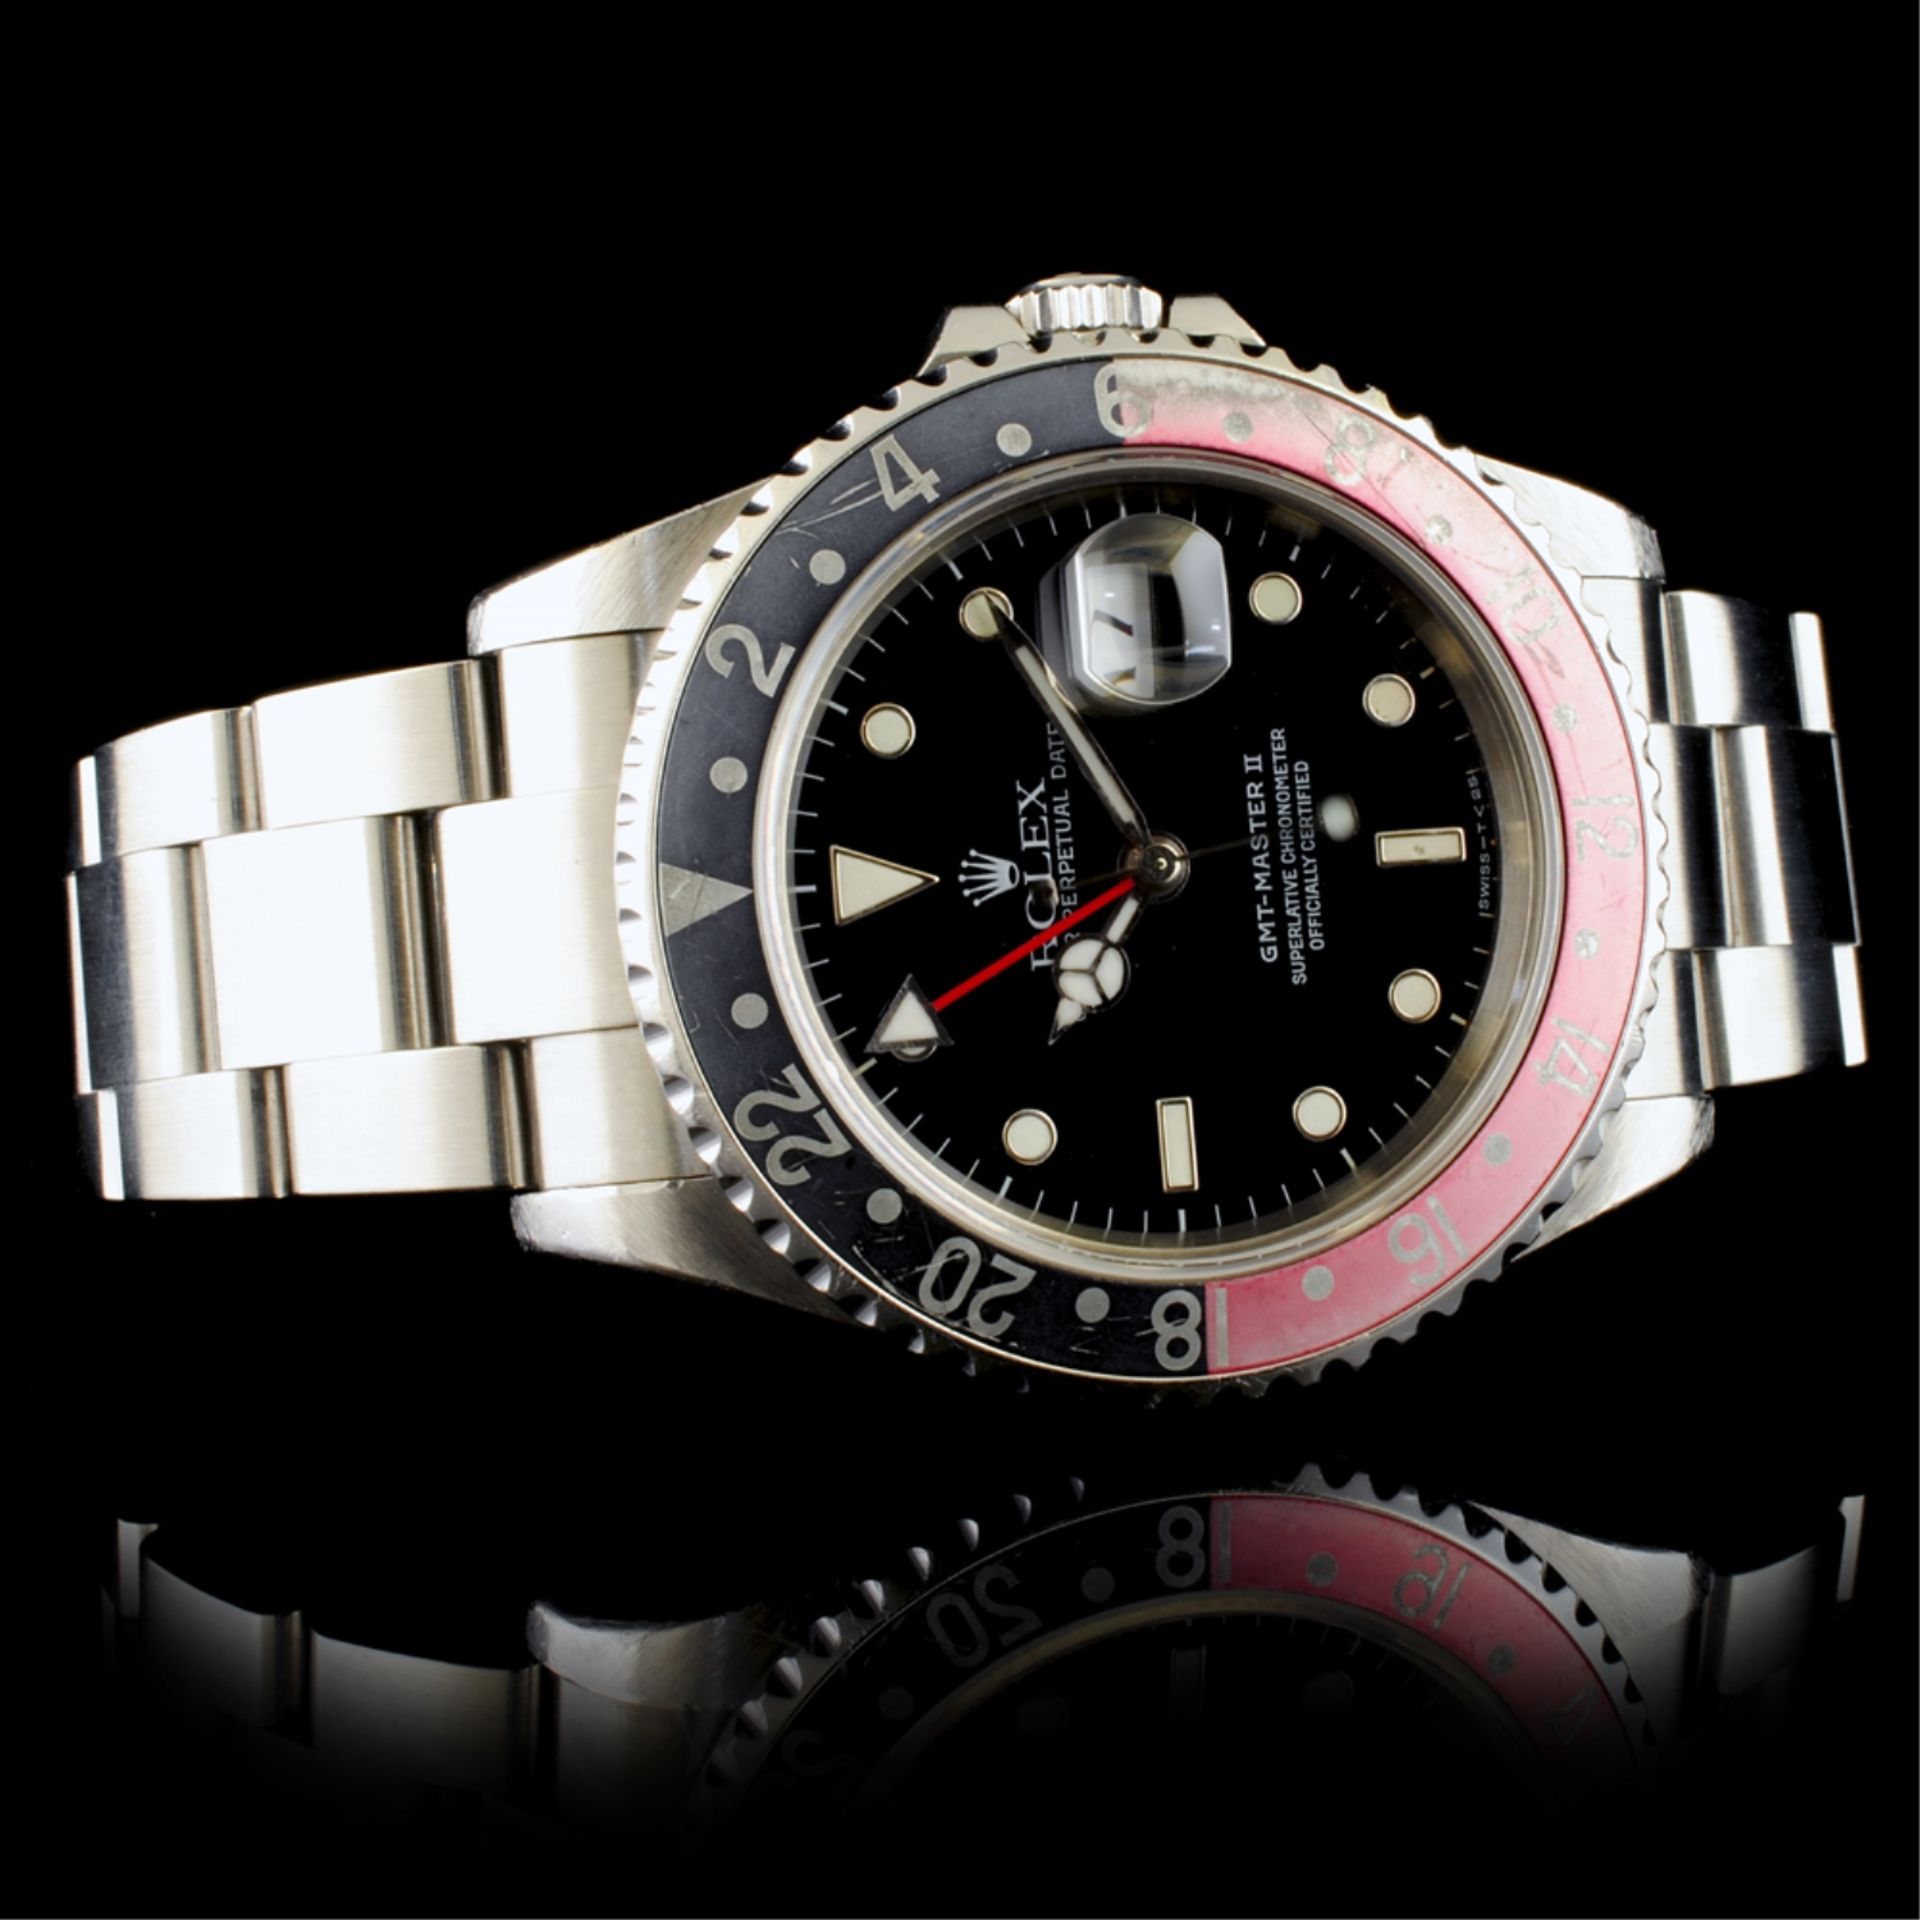 Rolex GMT-Master II â€œPepsiâ€ Stainless Steel Watch - Image 3 of 4